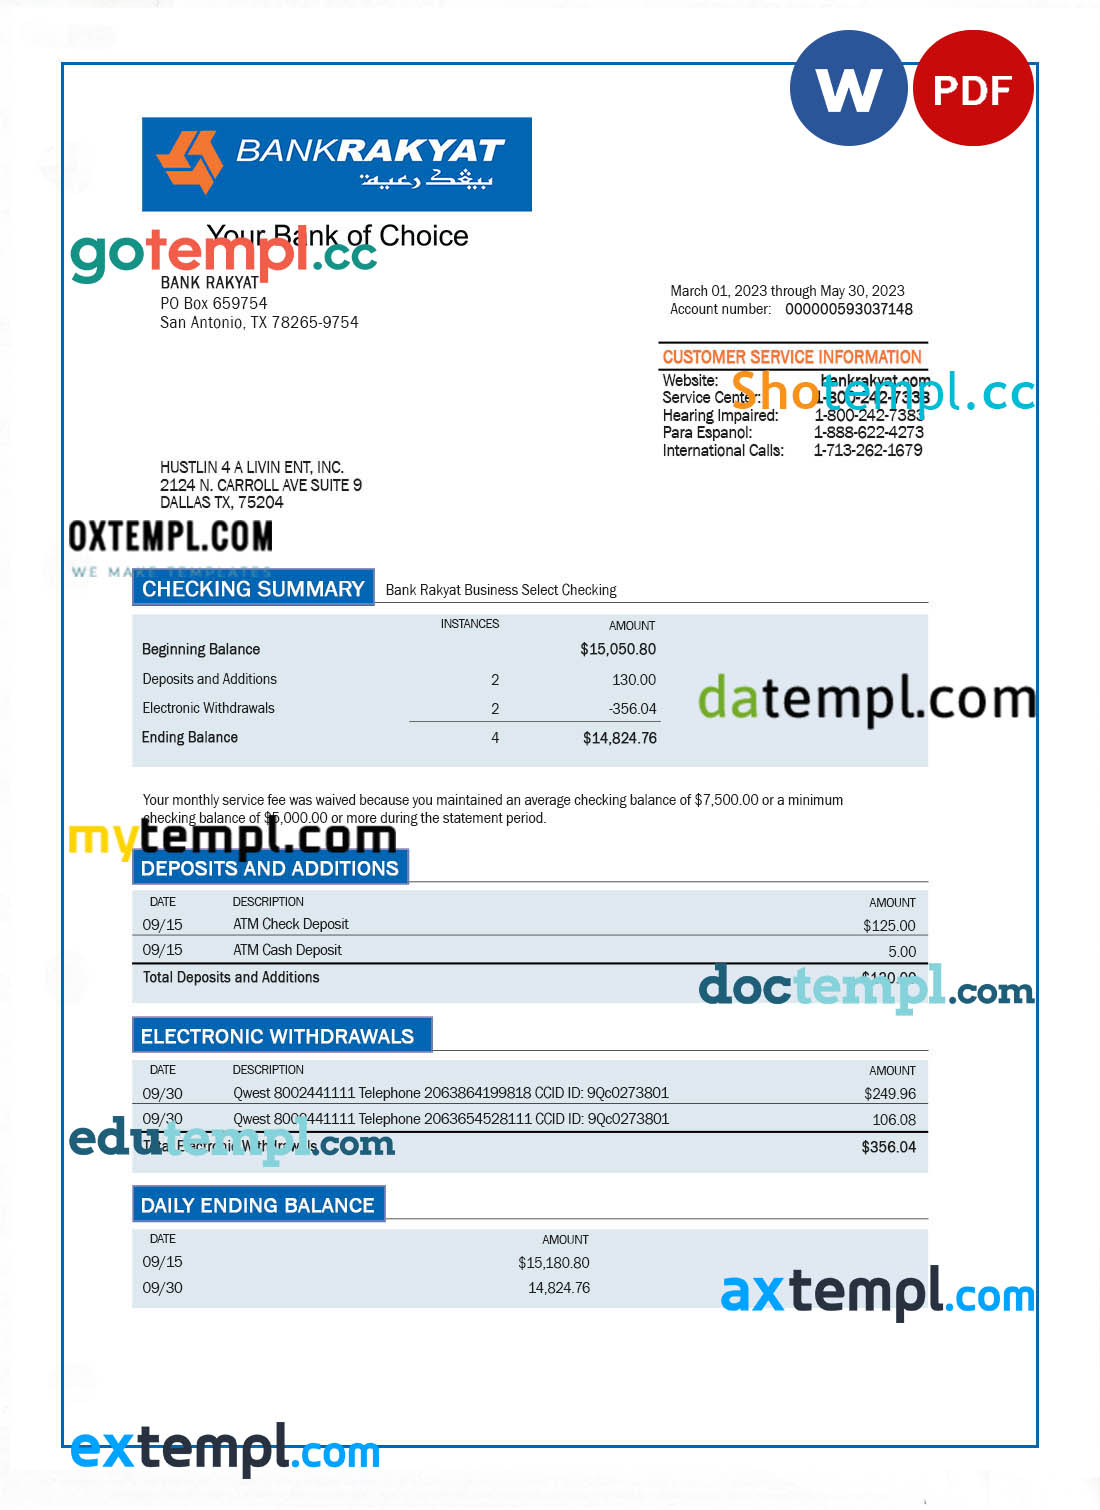 editable template, Bank Rakyat enterprise account statement Word and PDF template